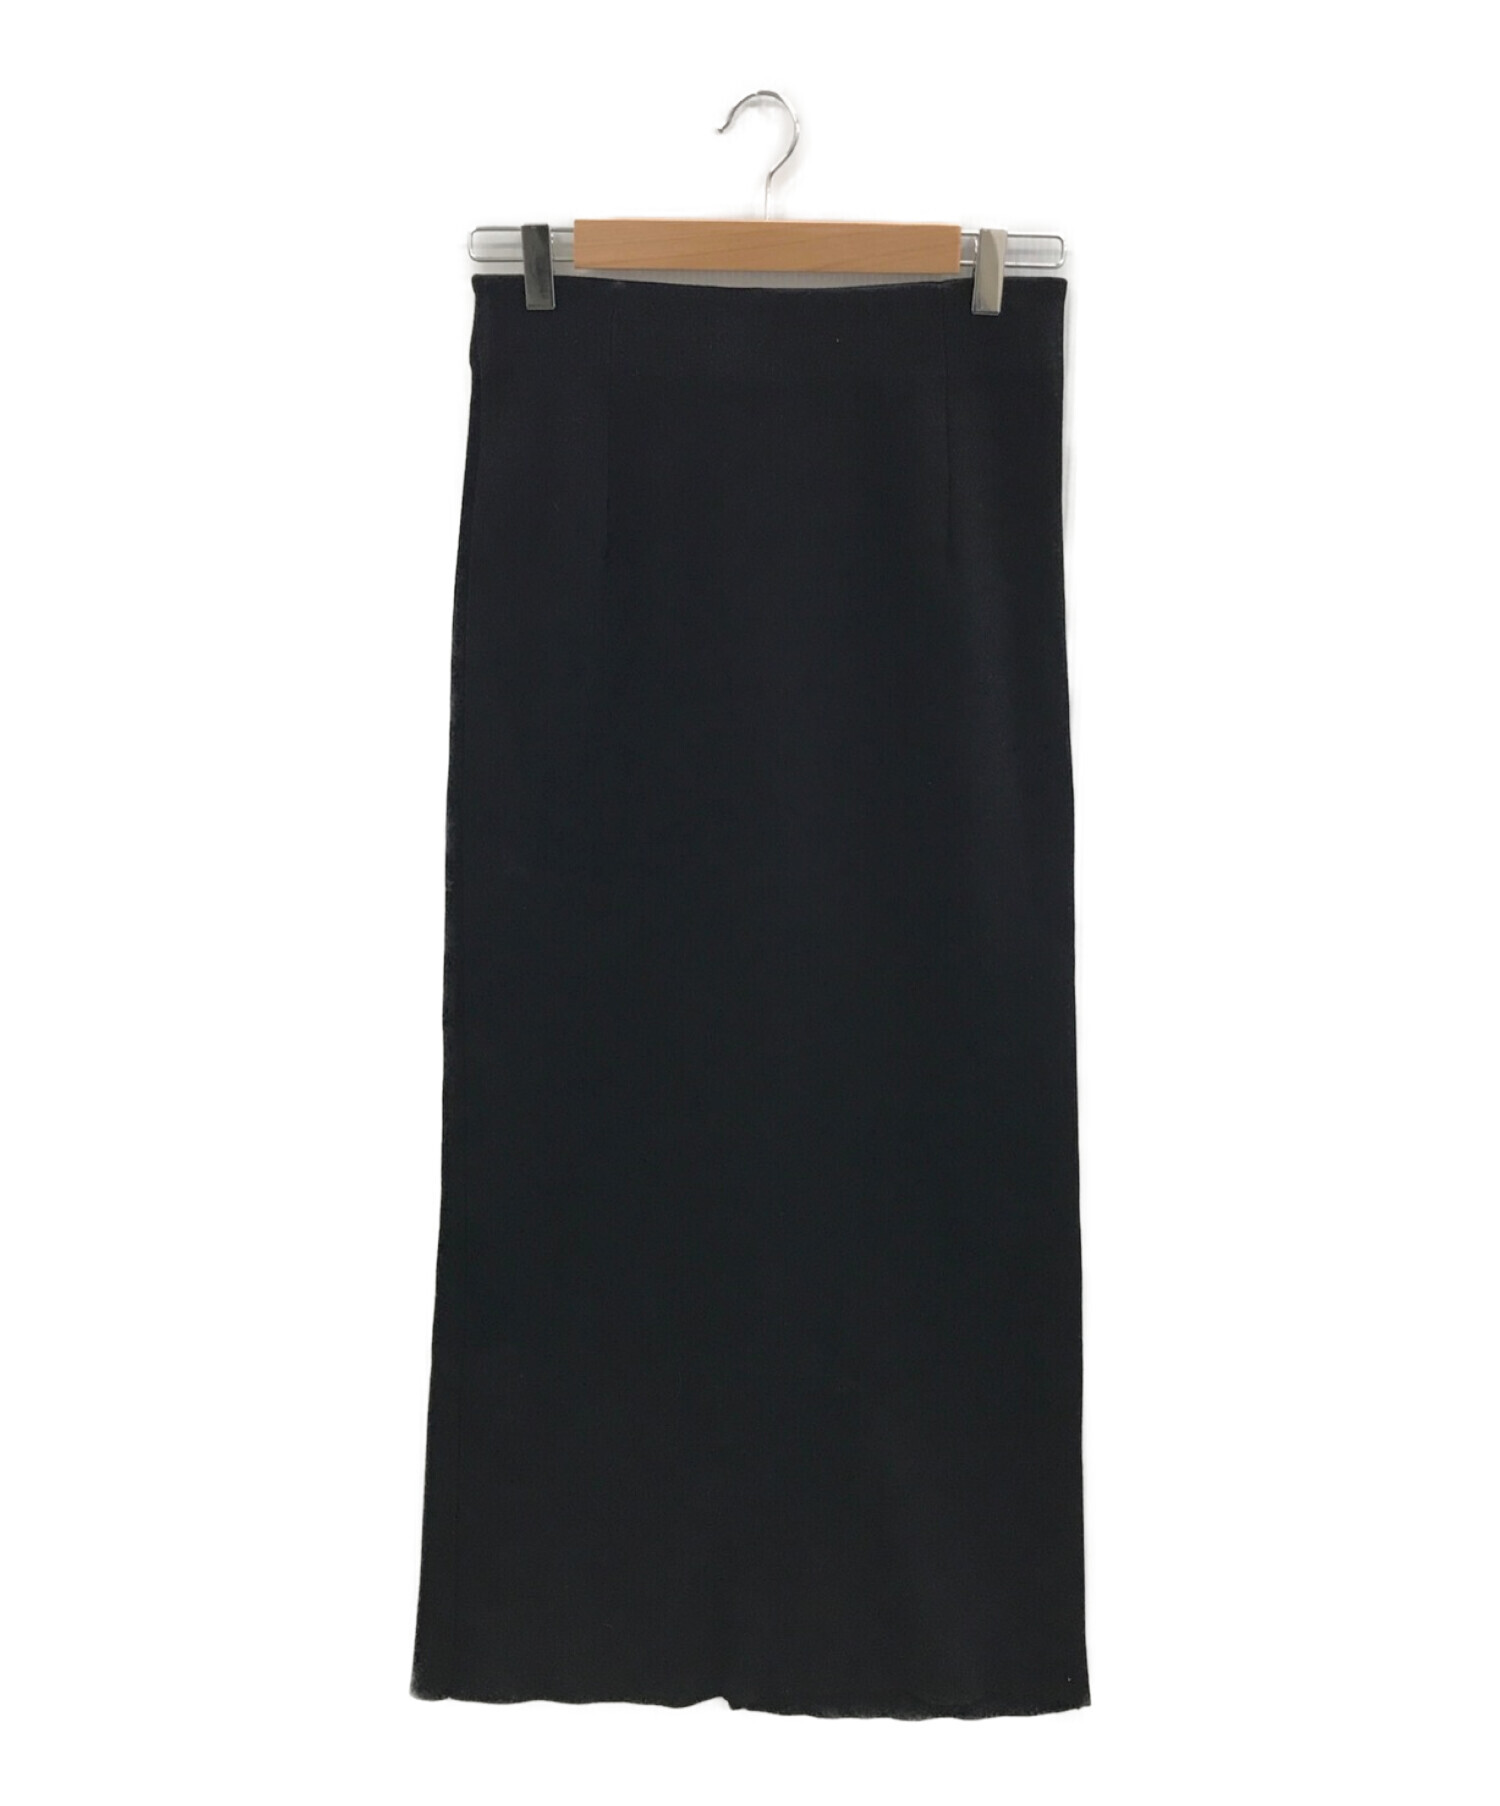 FRAMeWORK (フレームワーク) スムースタイトロングスカート ブラック サイズ:38